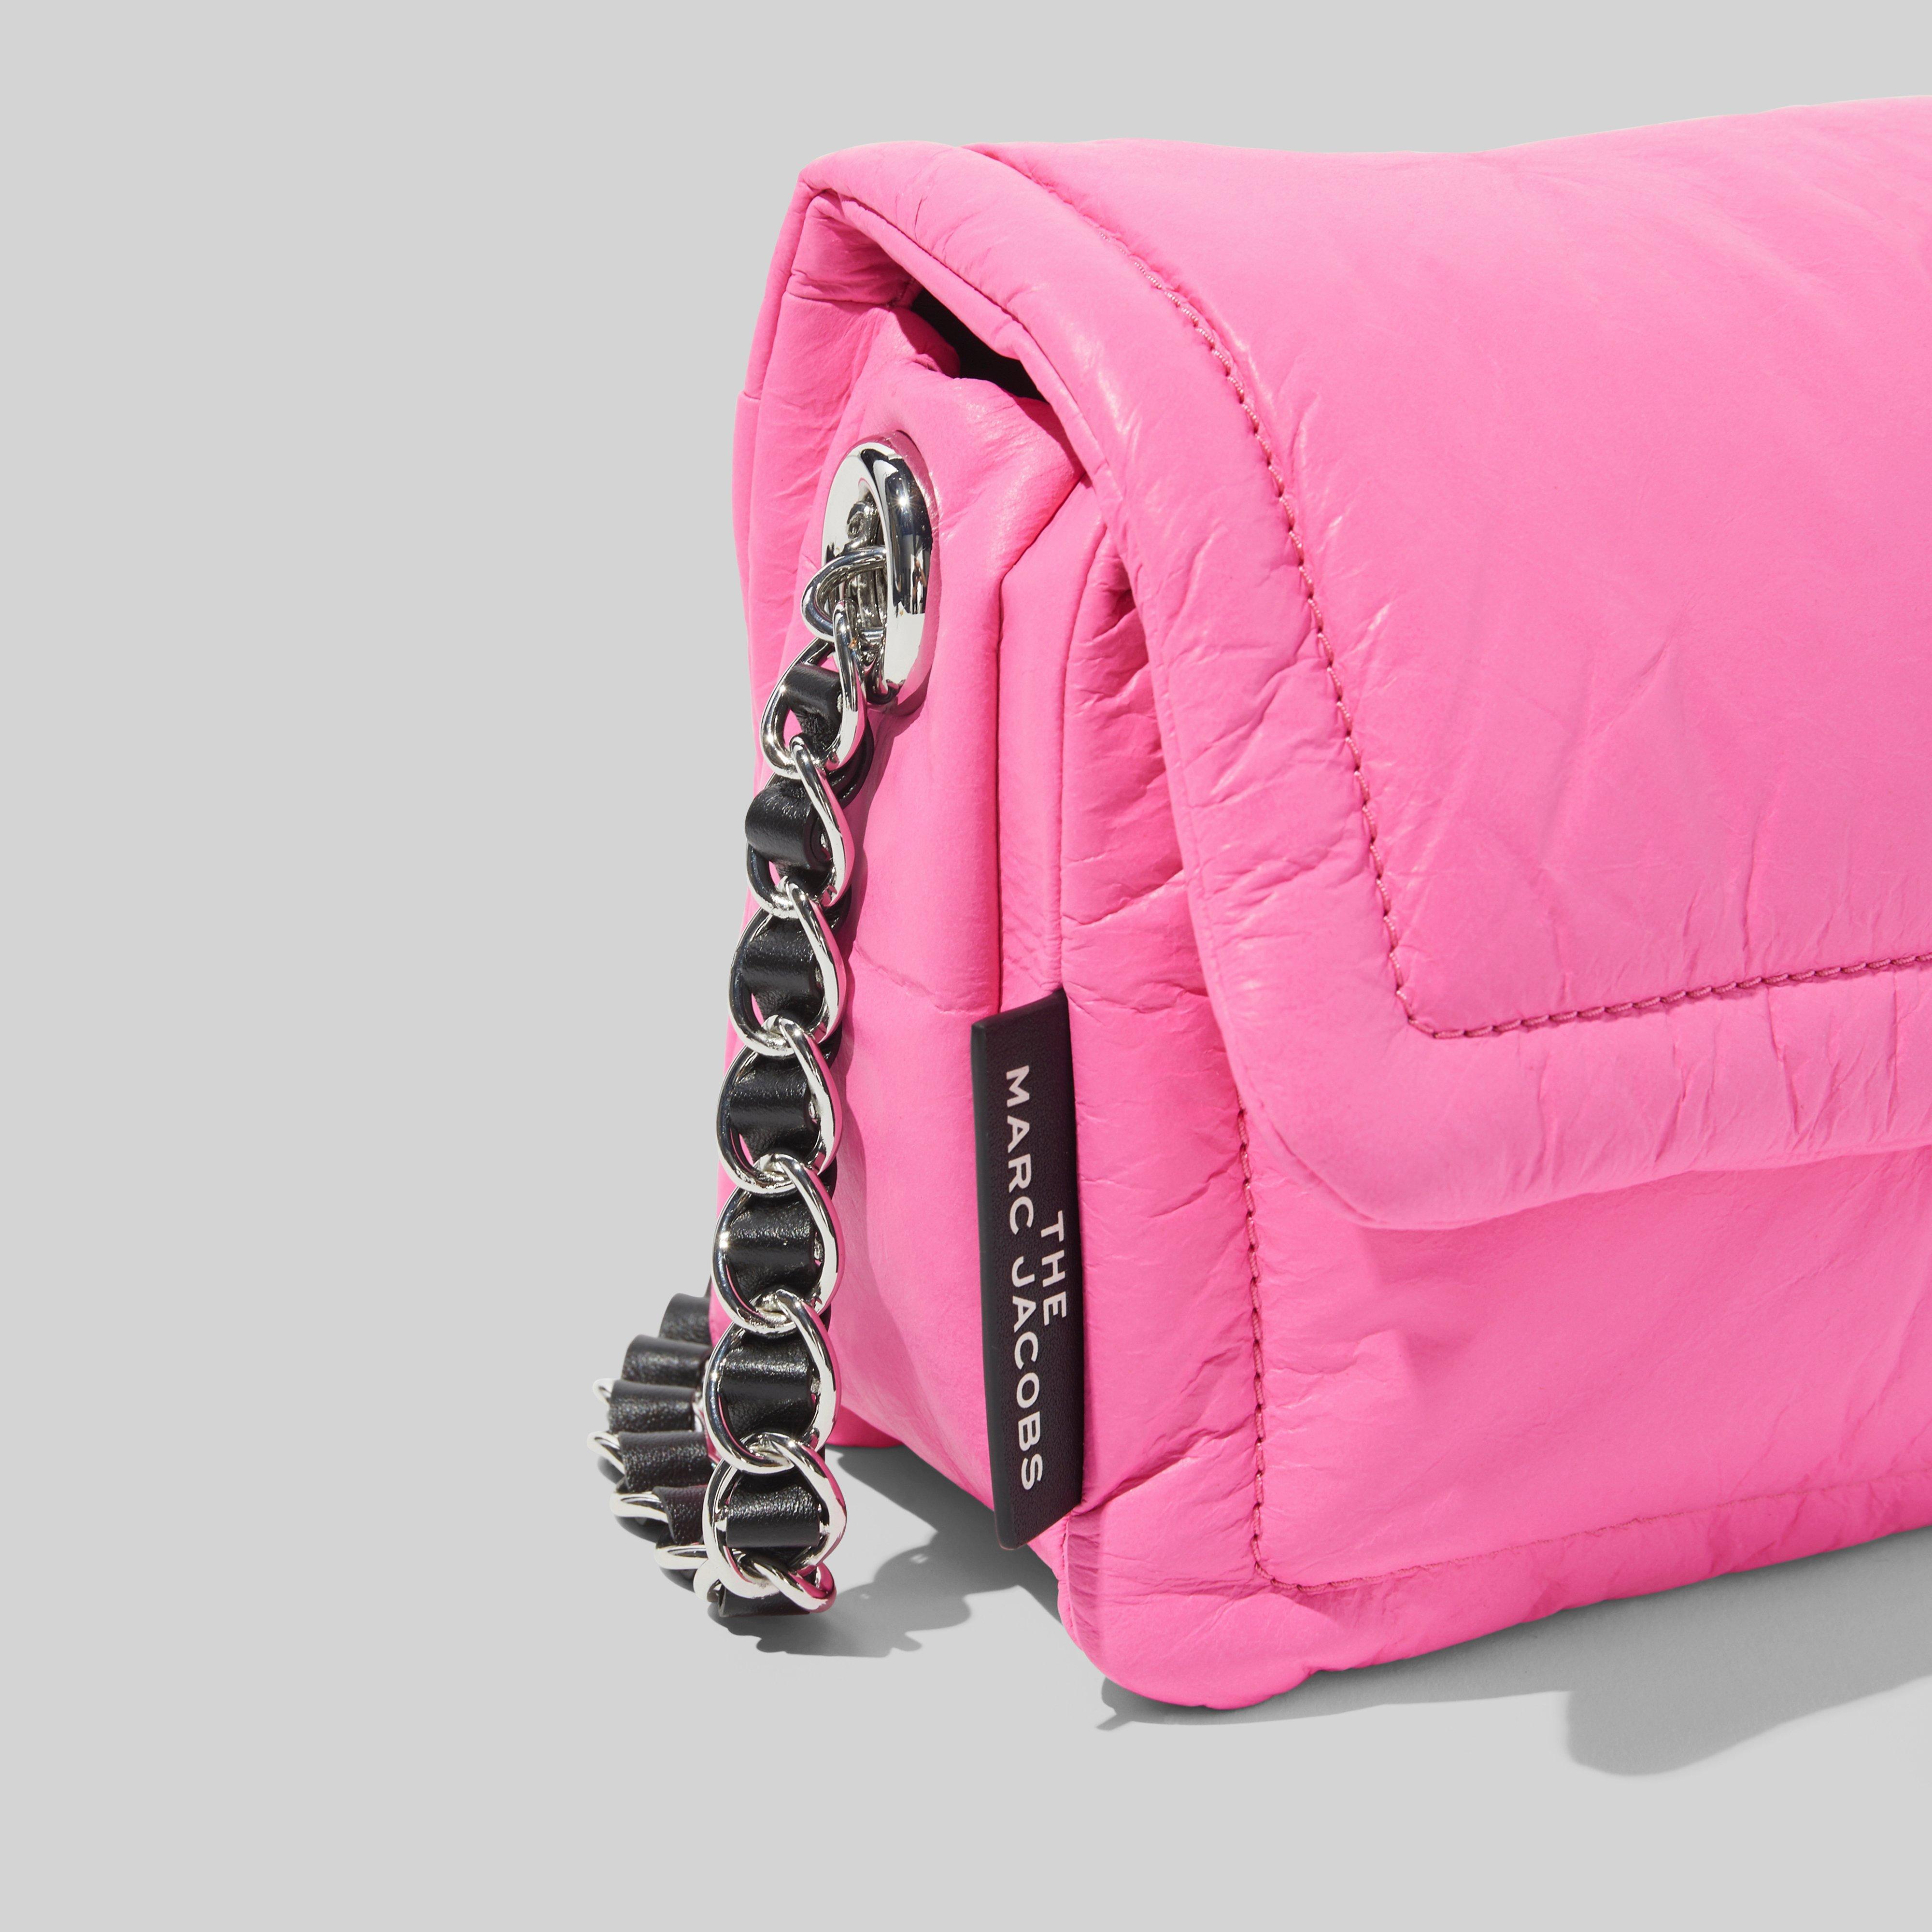 The Marc Jacobs The Pillow Bag - Pink Crossbody Bags, Handbags